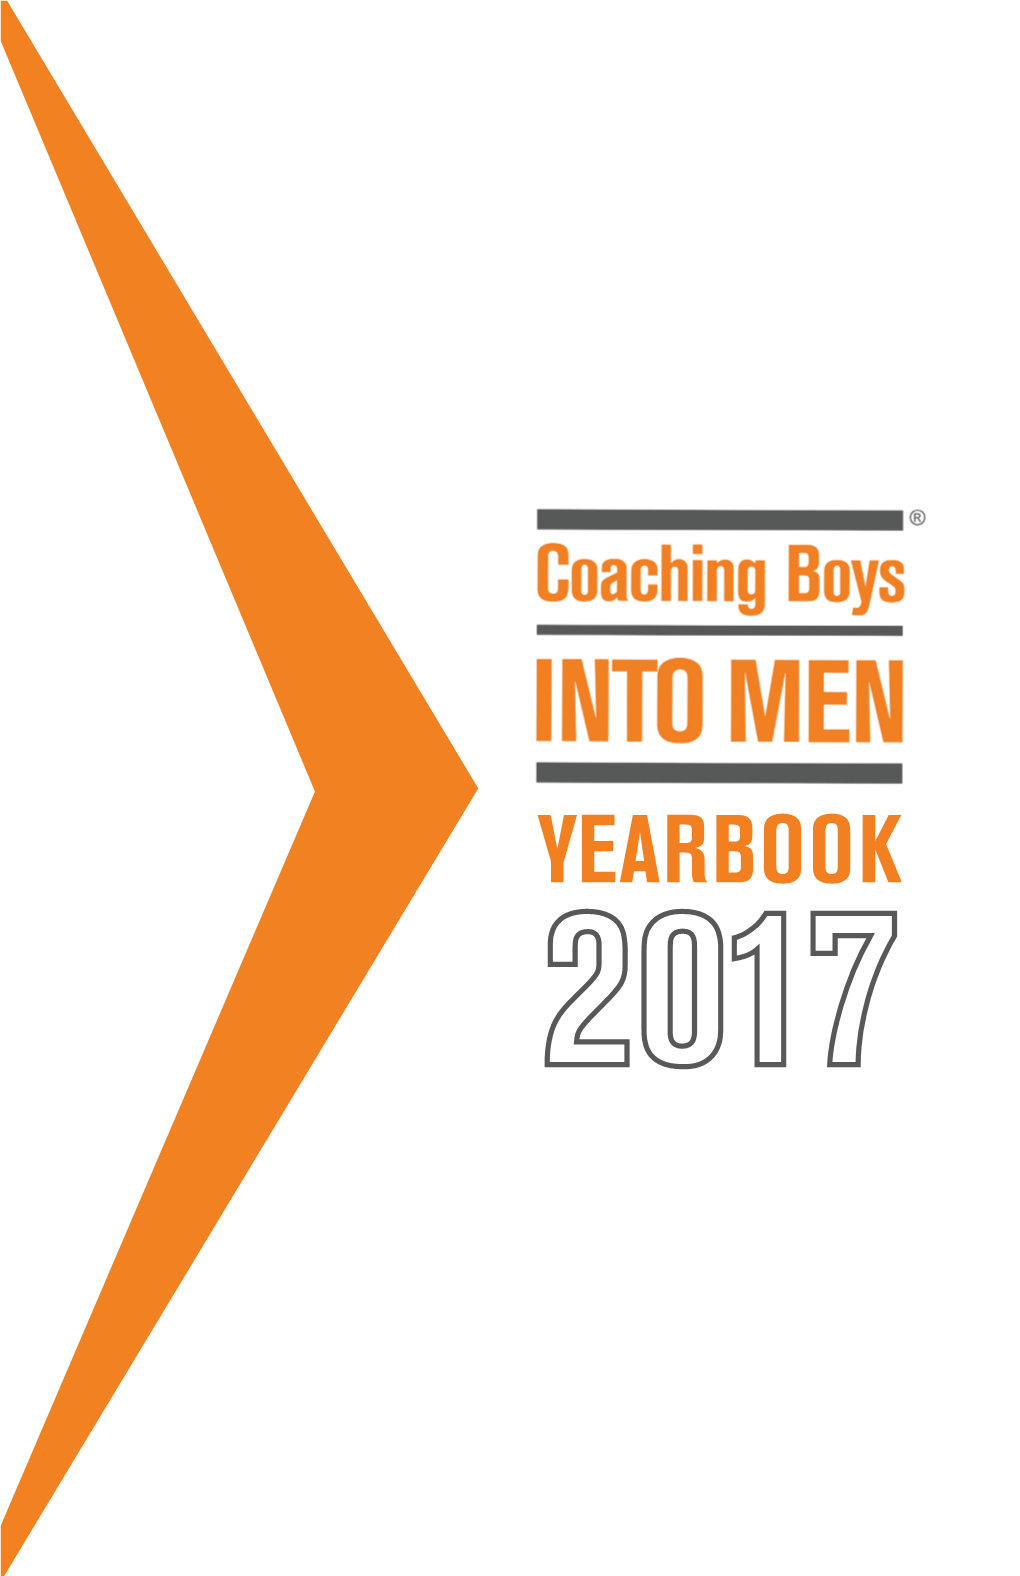 Coaching Boys Into Men Yearbook 2017